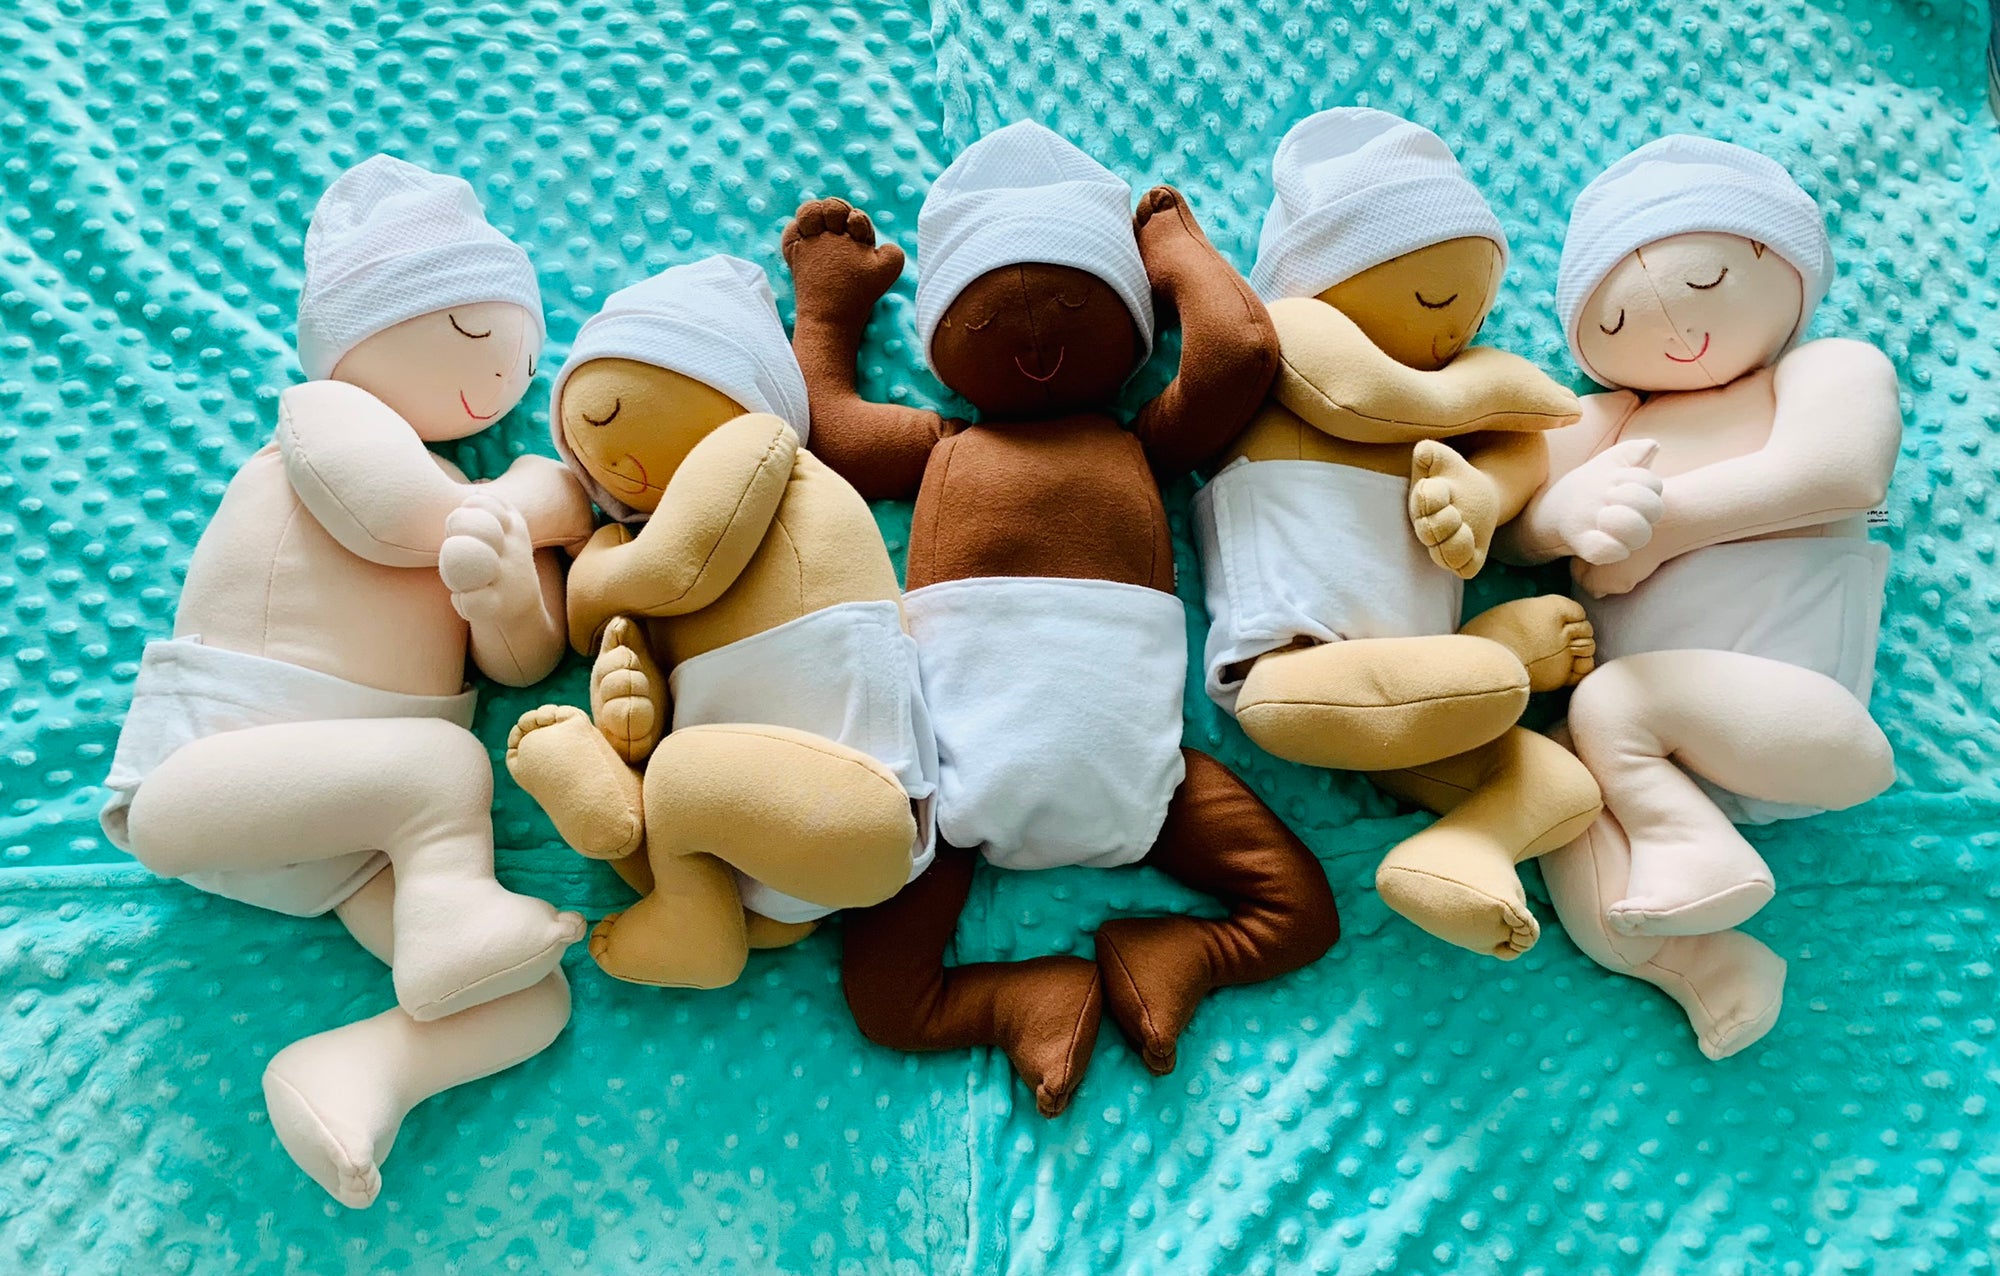 Handmade Weighted Newborn Baby Dolls: Uses and Benefits